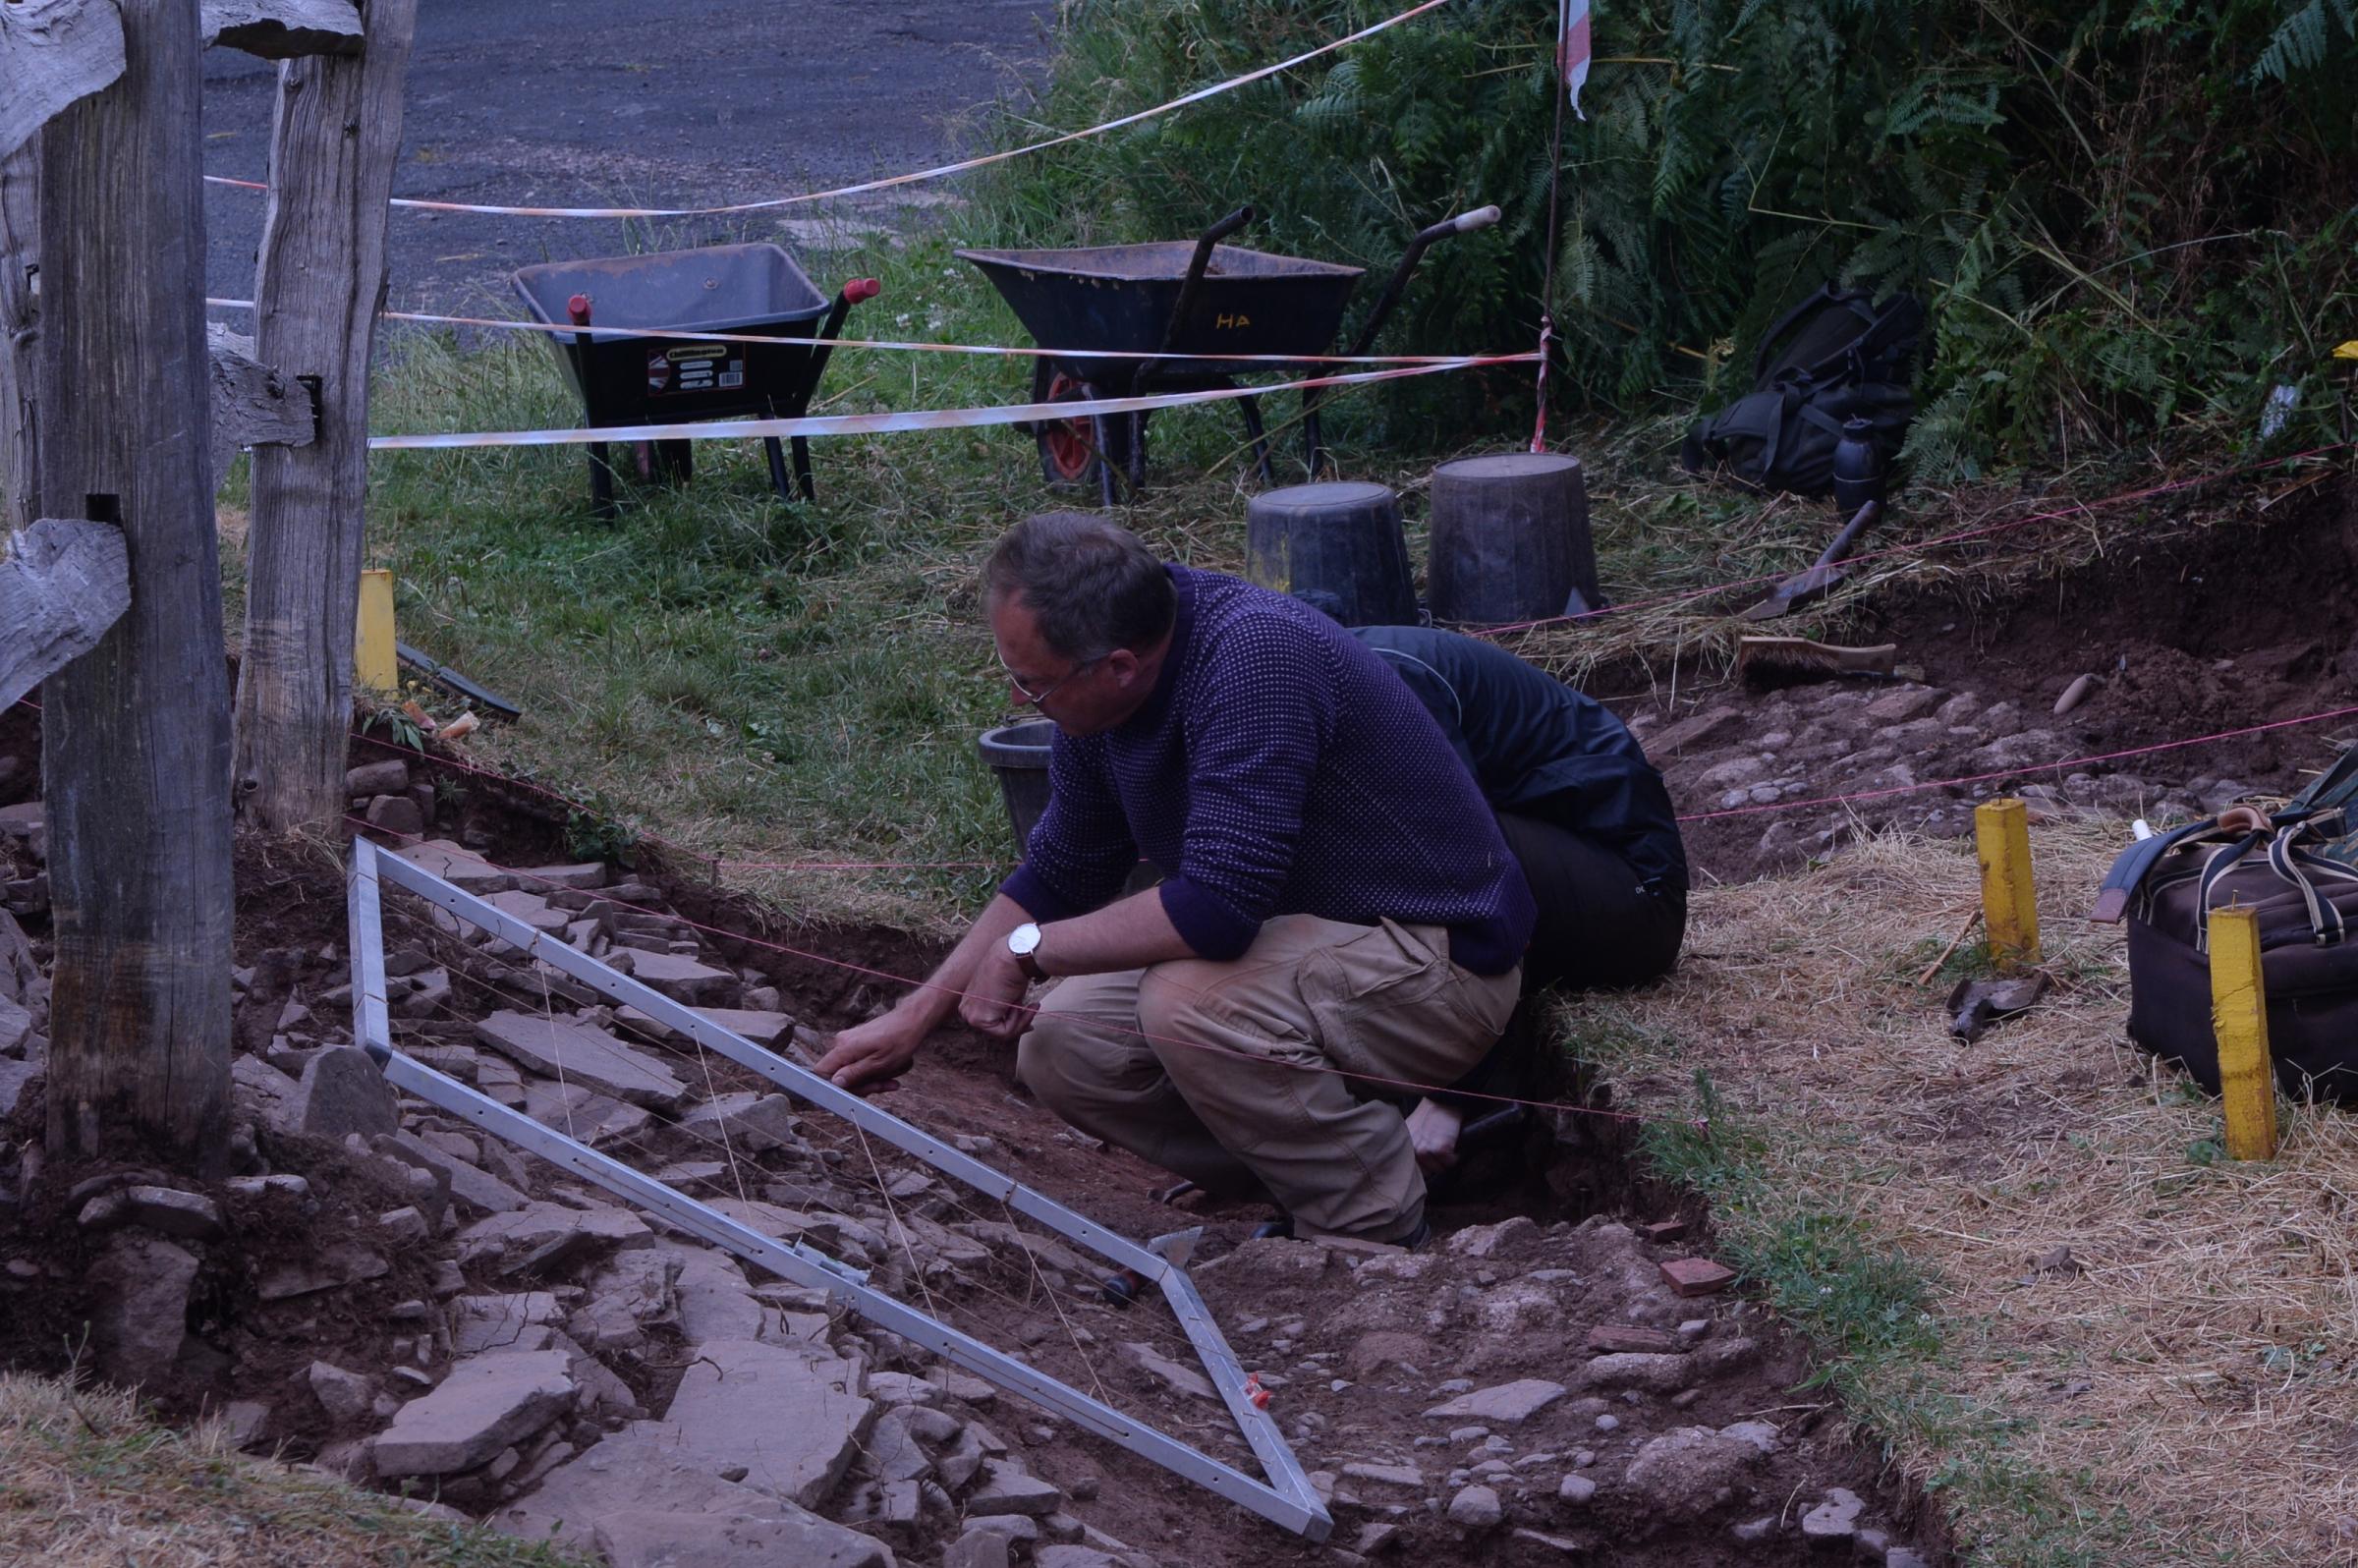 Professor Thomas and the team excavating at Arthurs Stone in Dorstone. Picture: Michael Eden